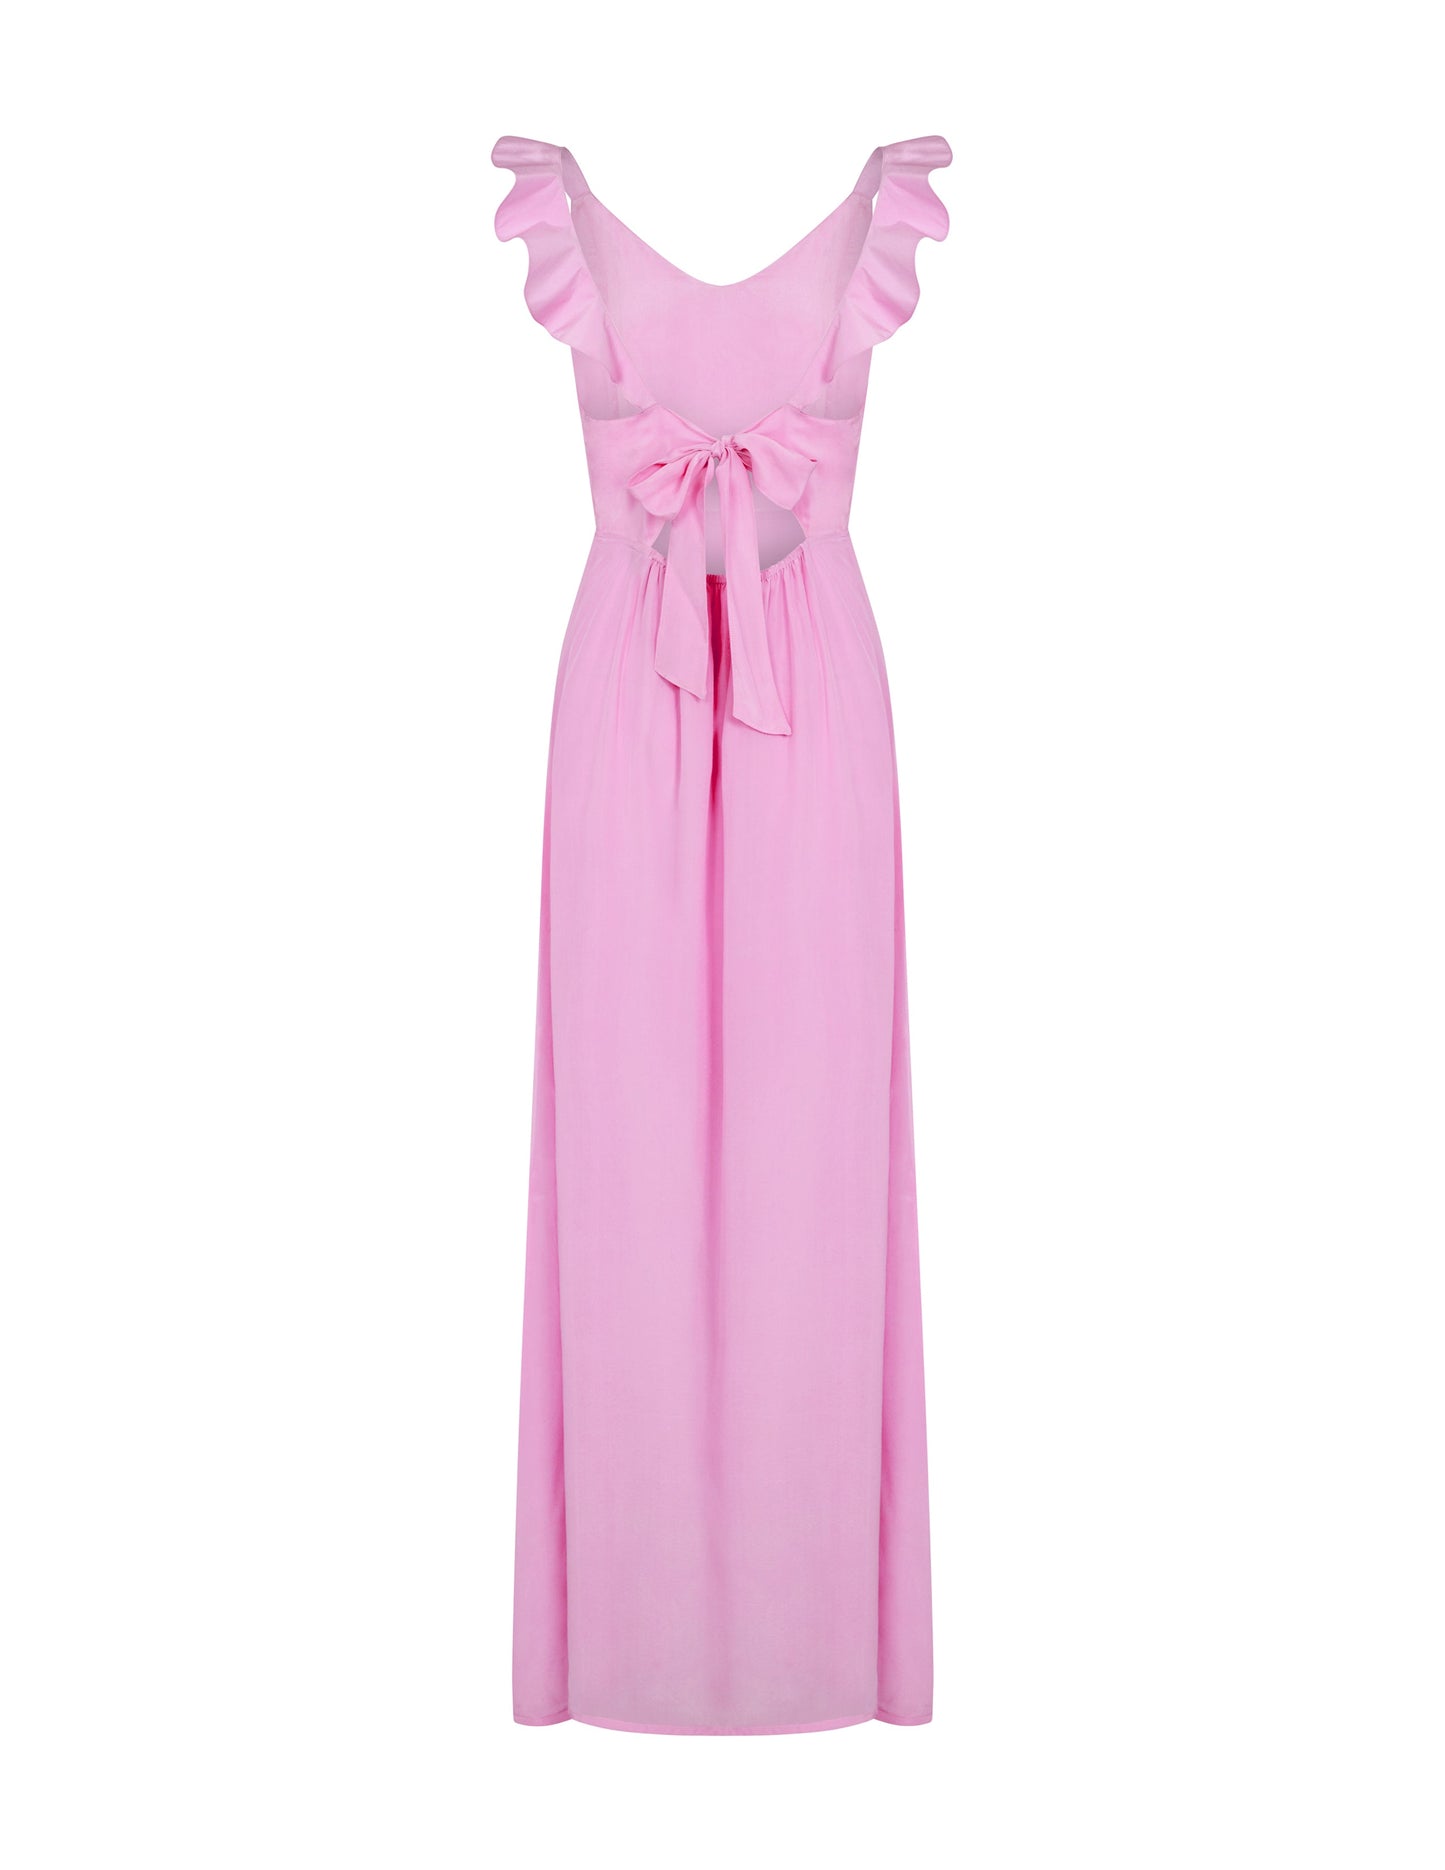 In Stock - Pale Pink Lolita Dress